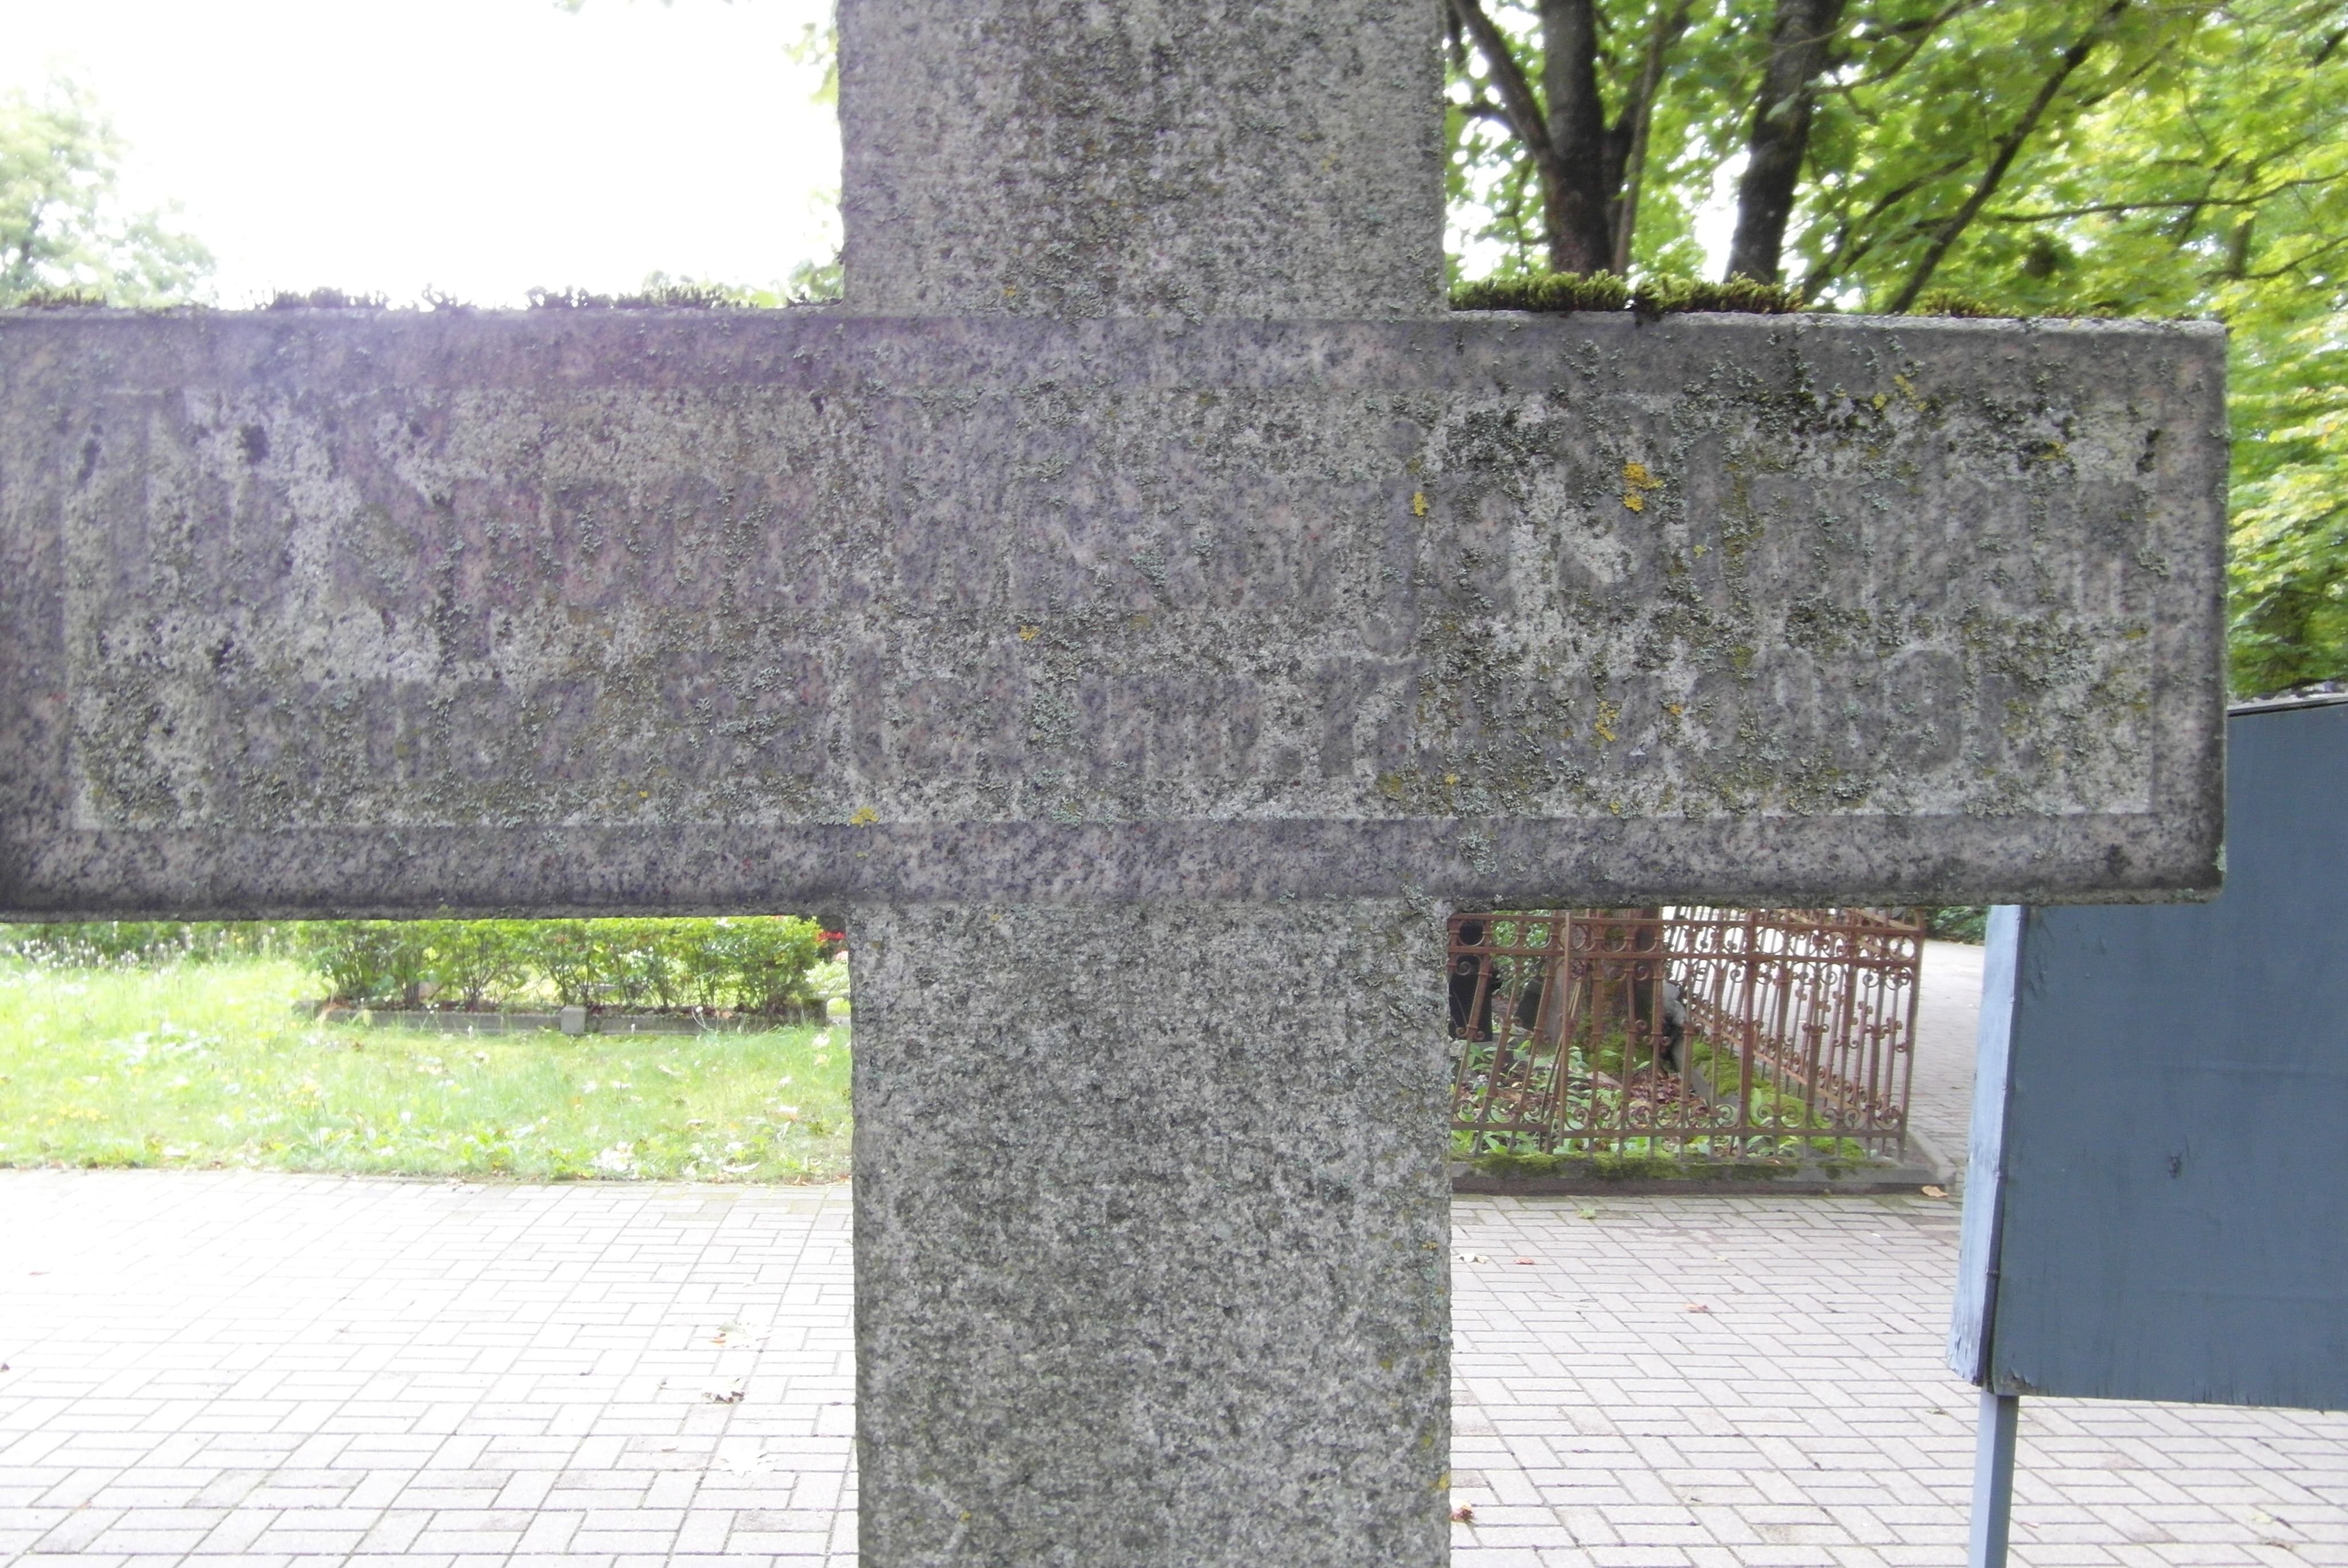 Fragment of the gravestone of Viktoriya Stankun, St Michael's cemetery in Riga, as of 2021.